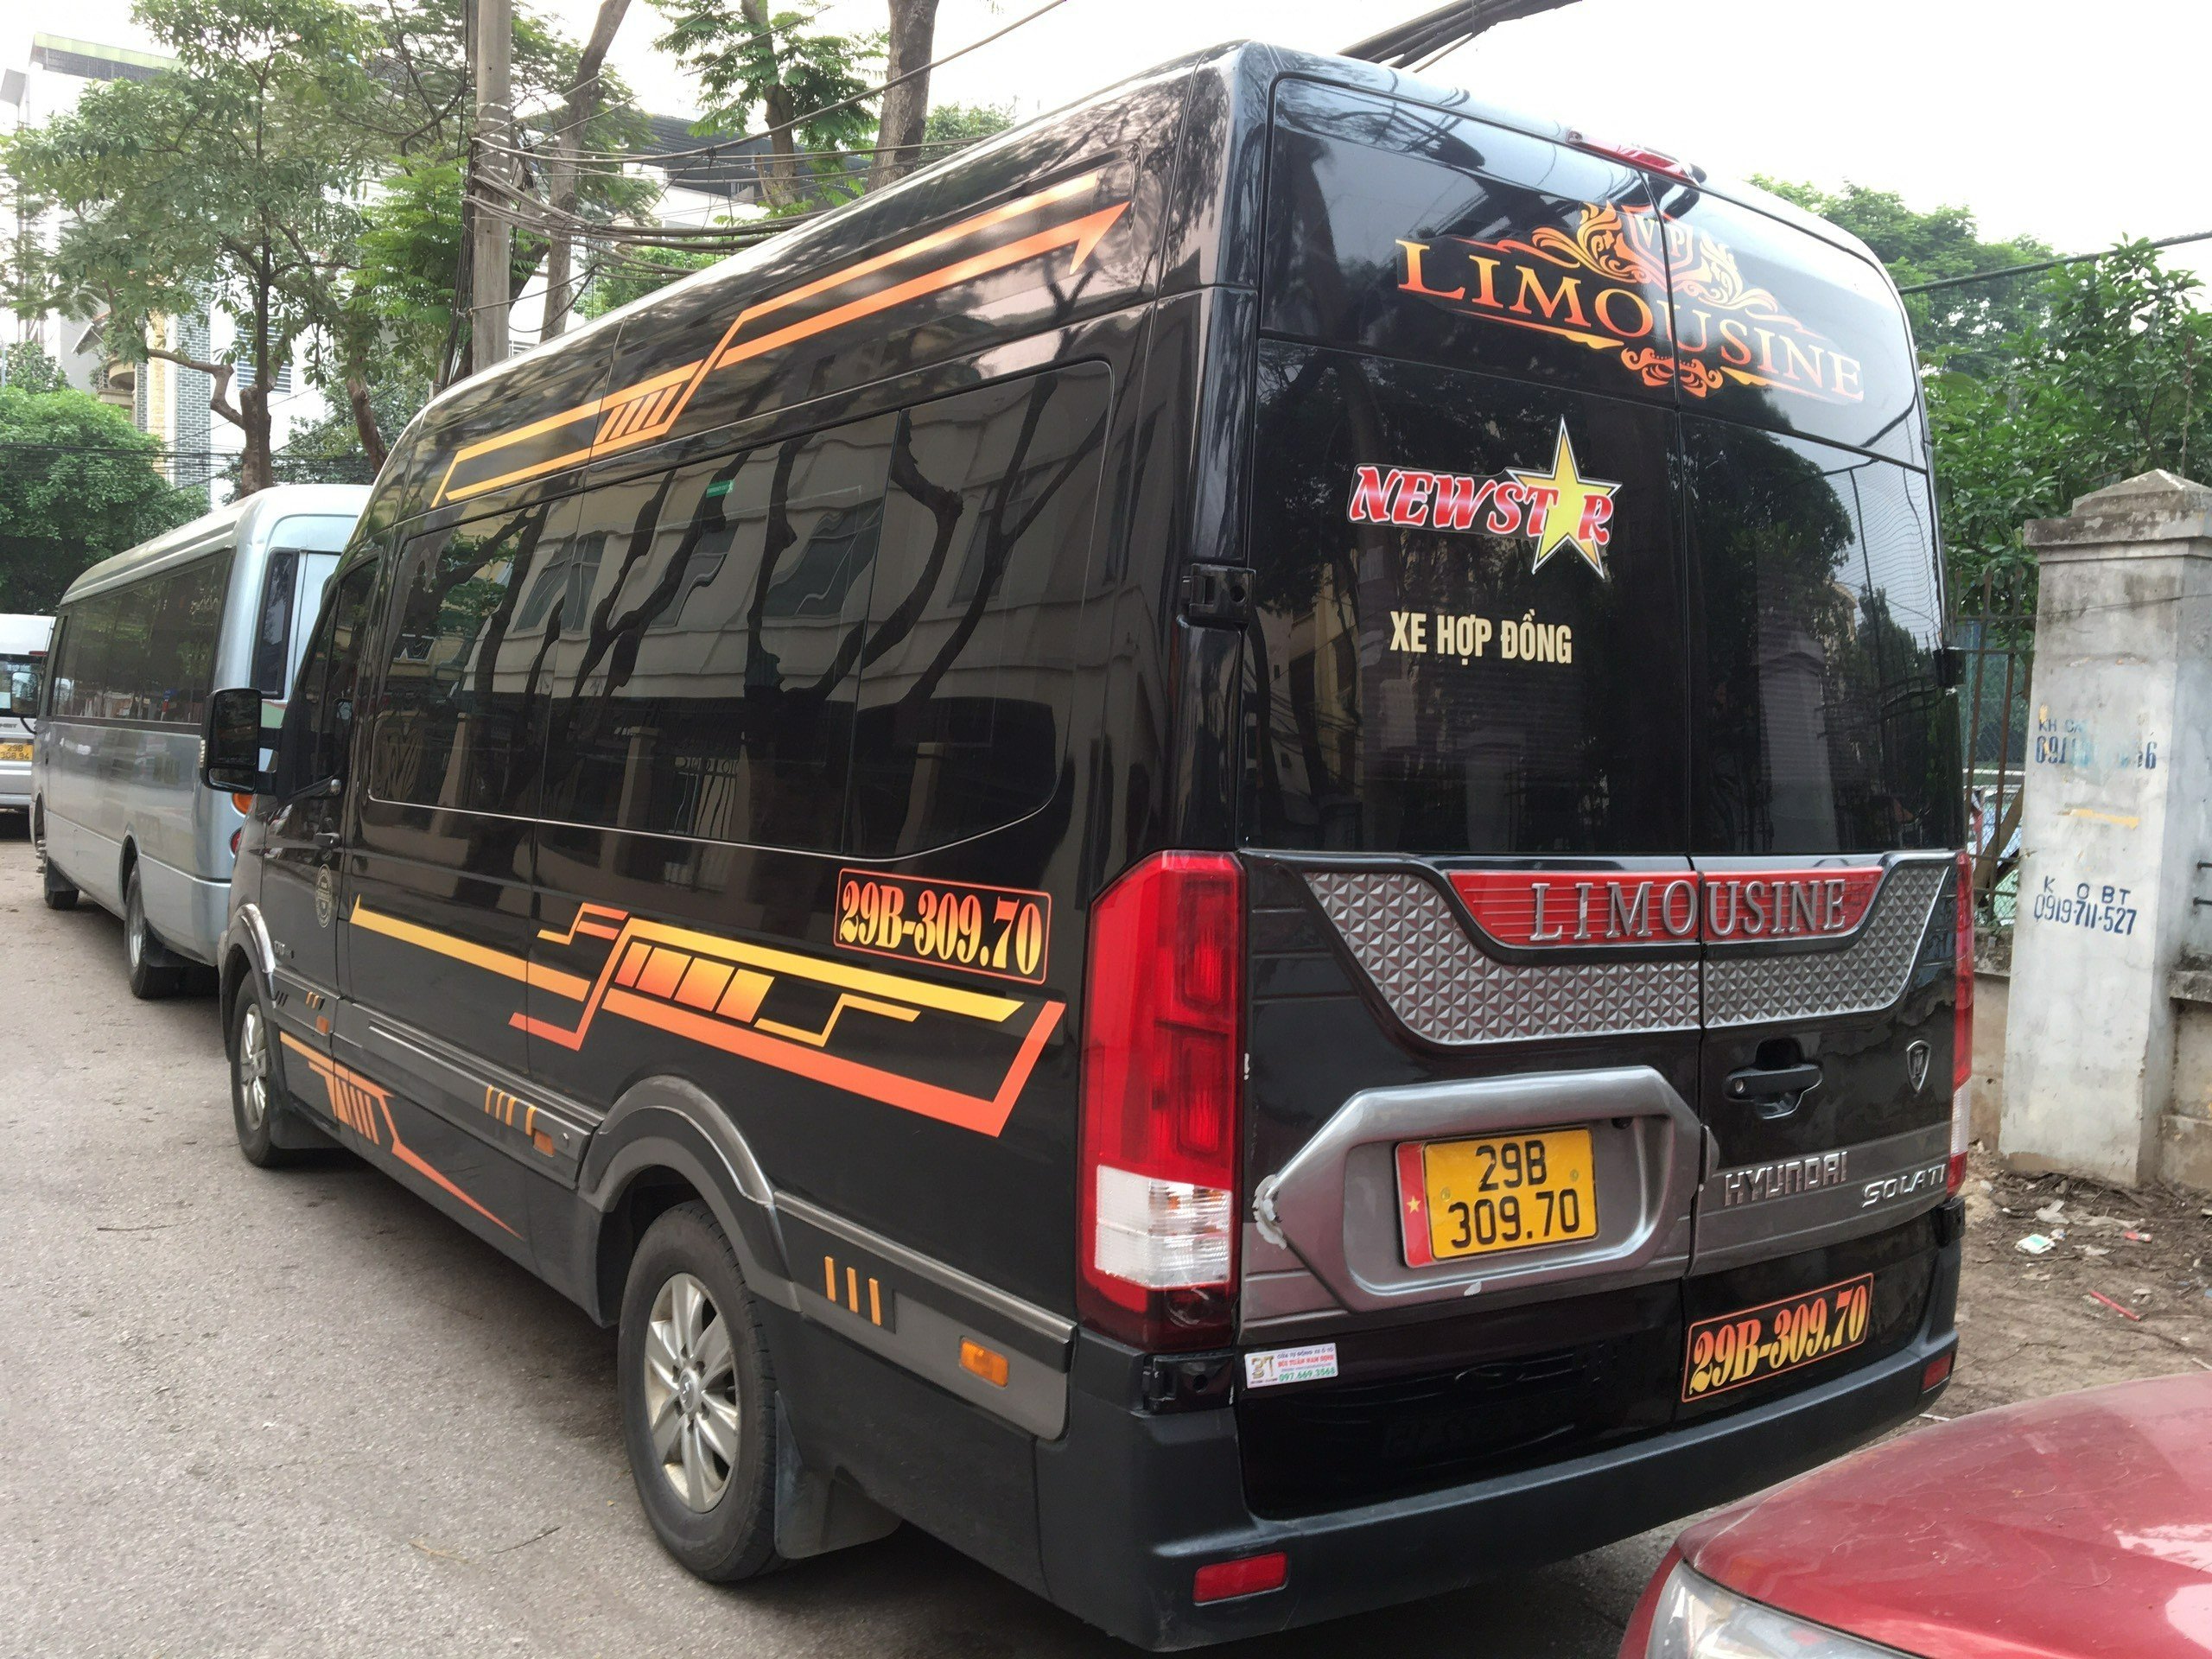 Sapa tour by Bus  3 days